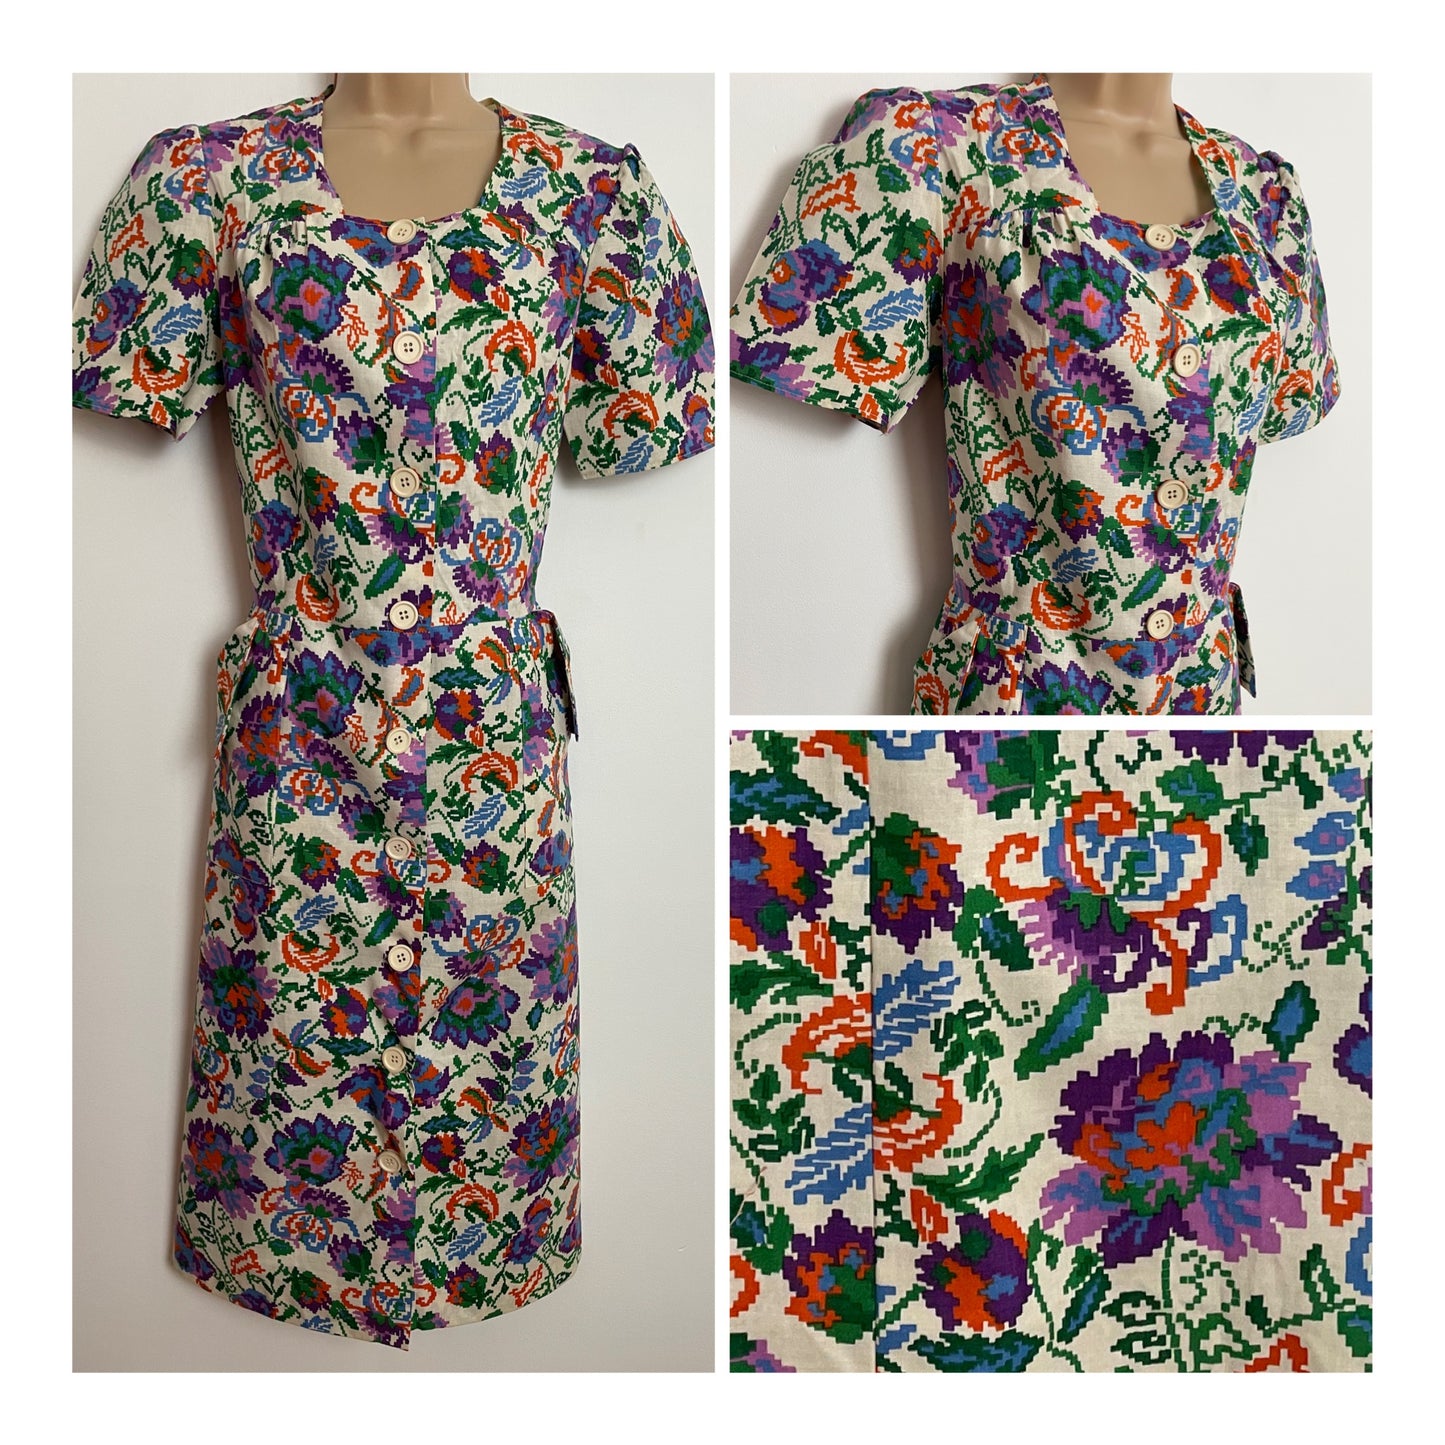 Vintage Early 80s UK Size 12 Cute Cream Orange Purple & Blue Pixelated Floral Print Cotton Day Dress By Diffusion Seldis Paris